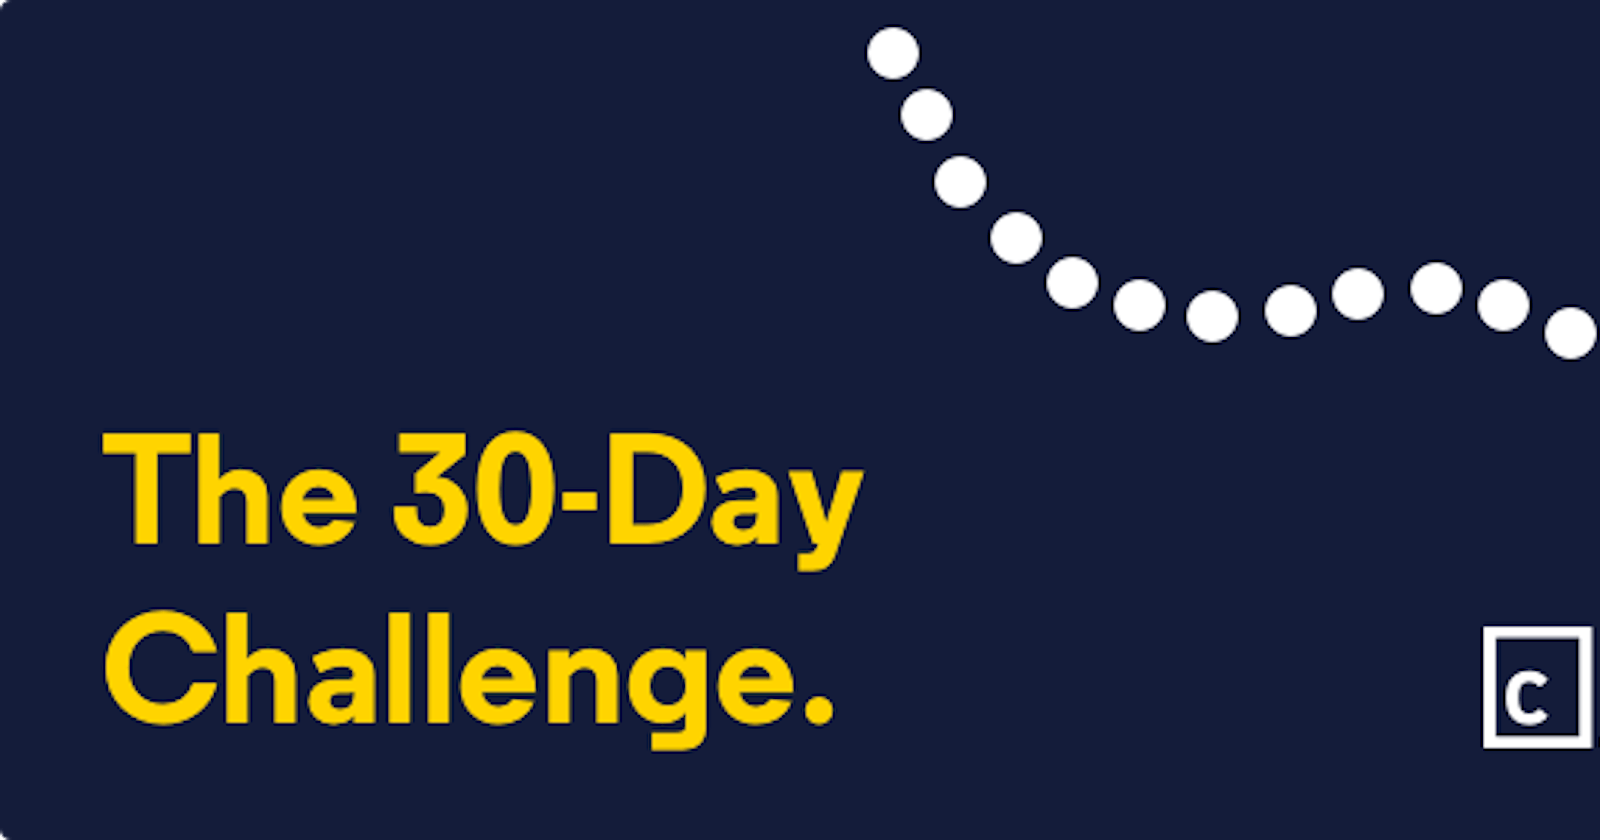 30 day learning challenge on hashnode!